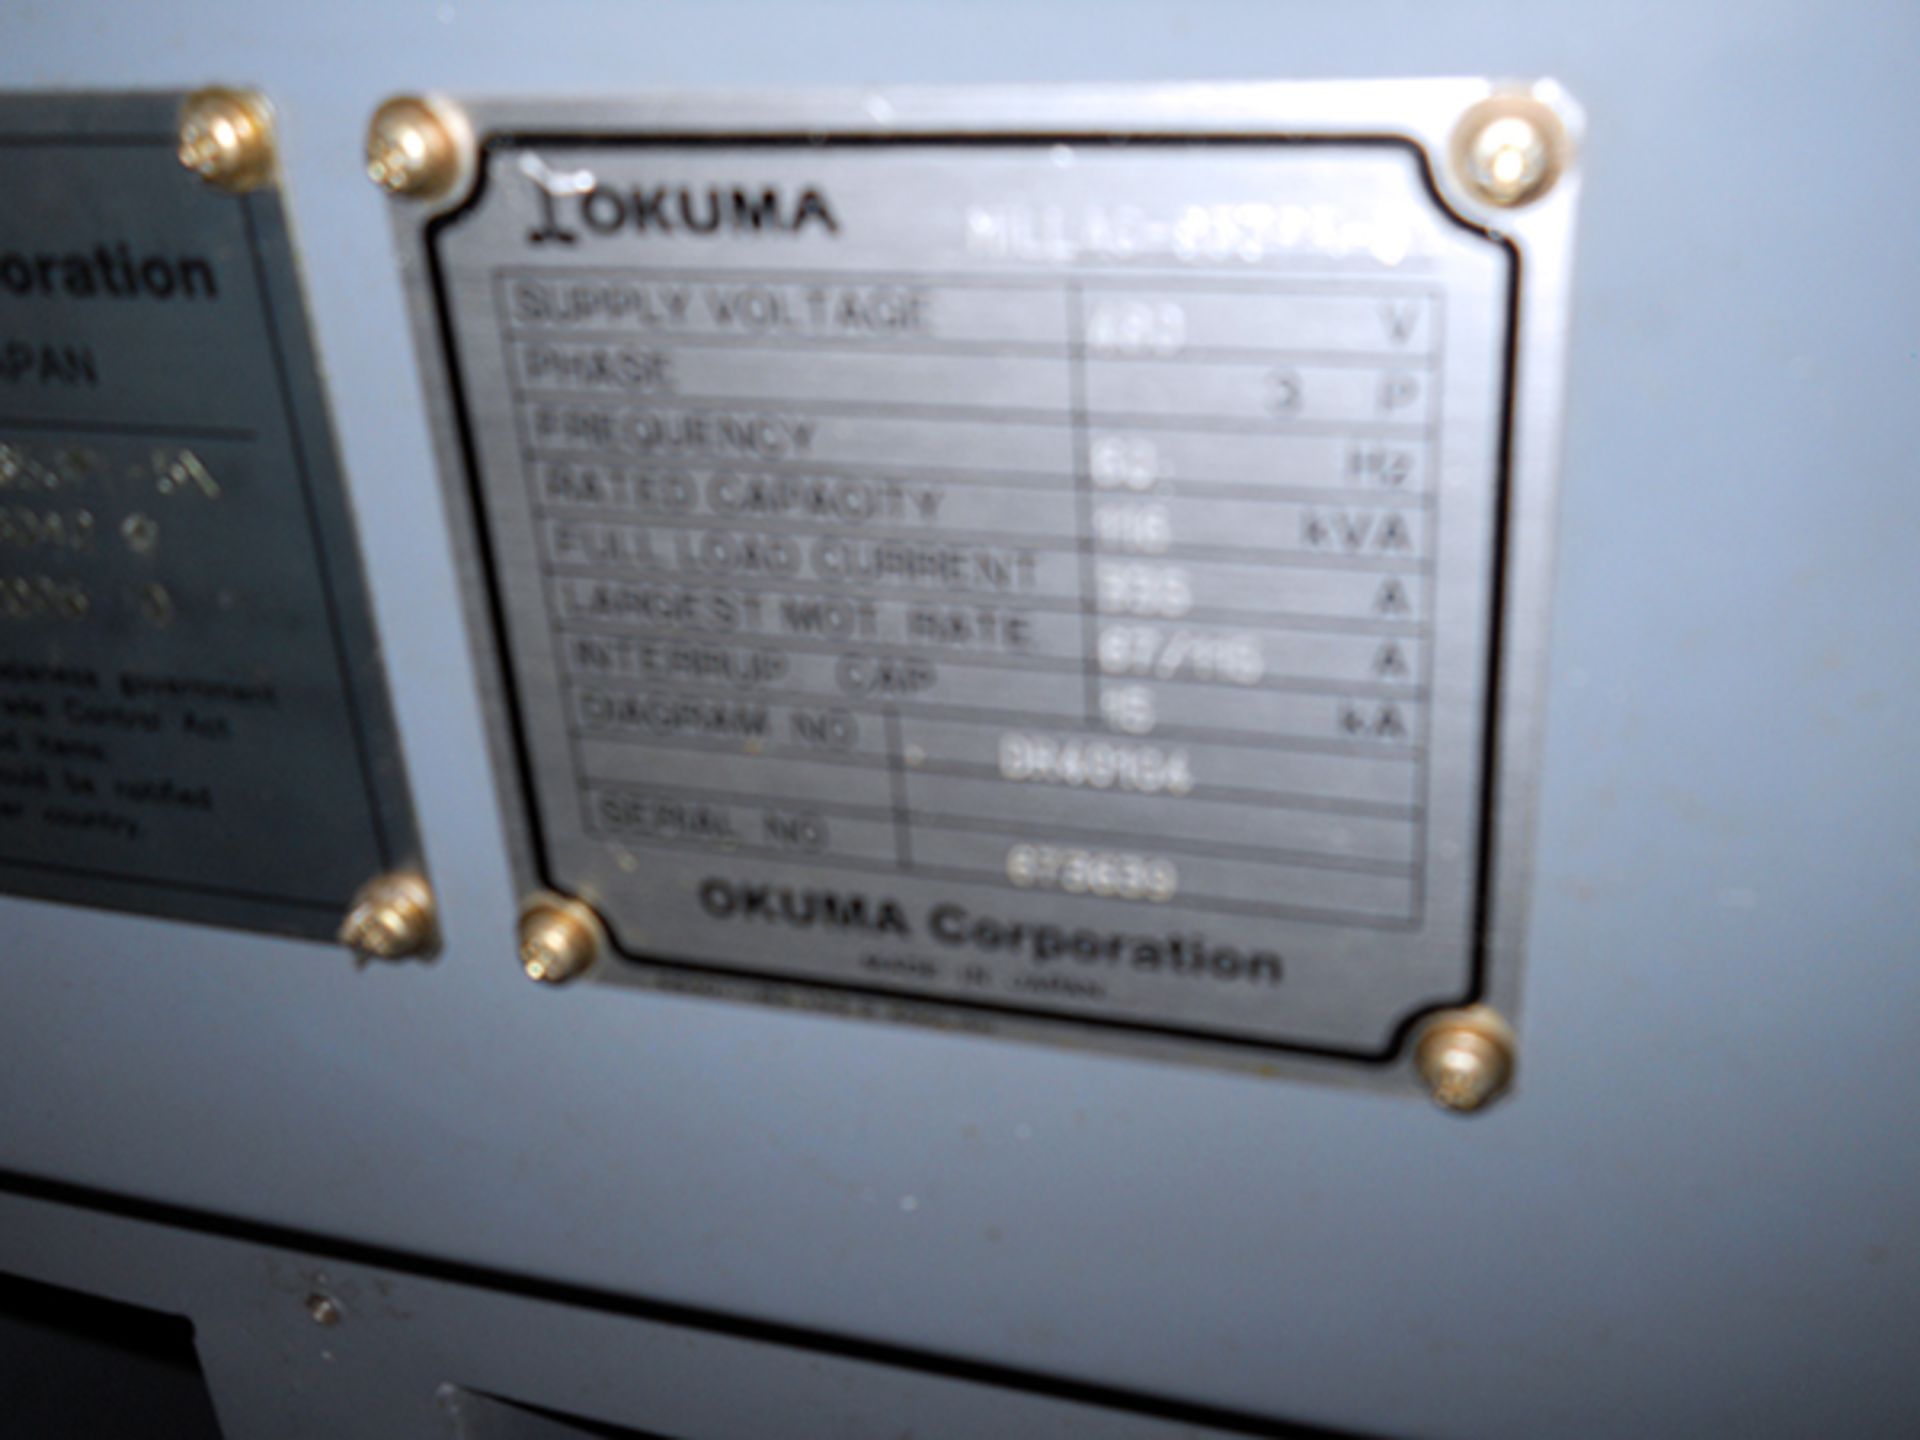 Okuma Millac 853PF-5X 5-Axis Machining Center (2008) - Image 20 of 37